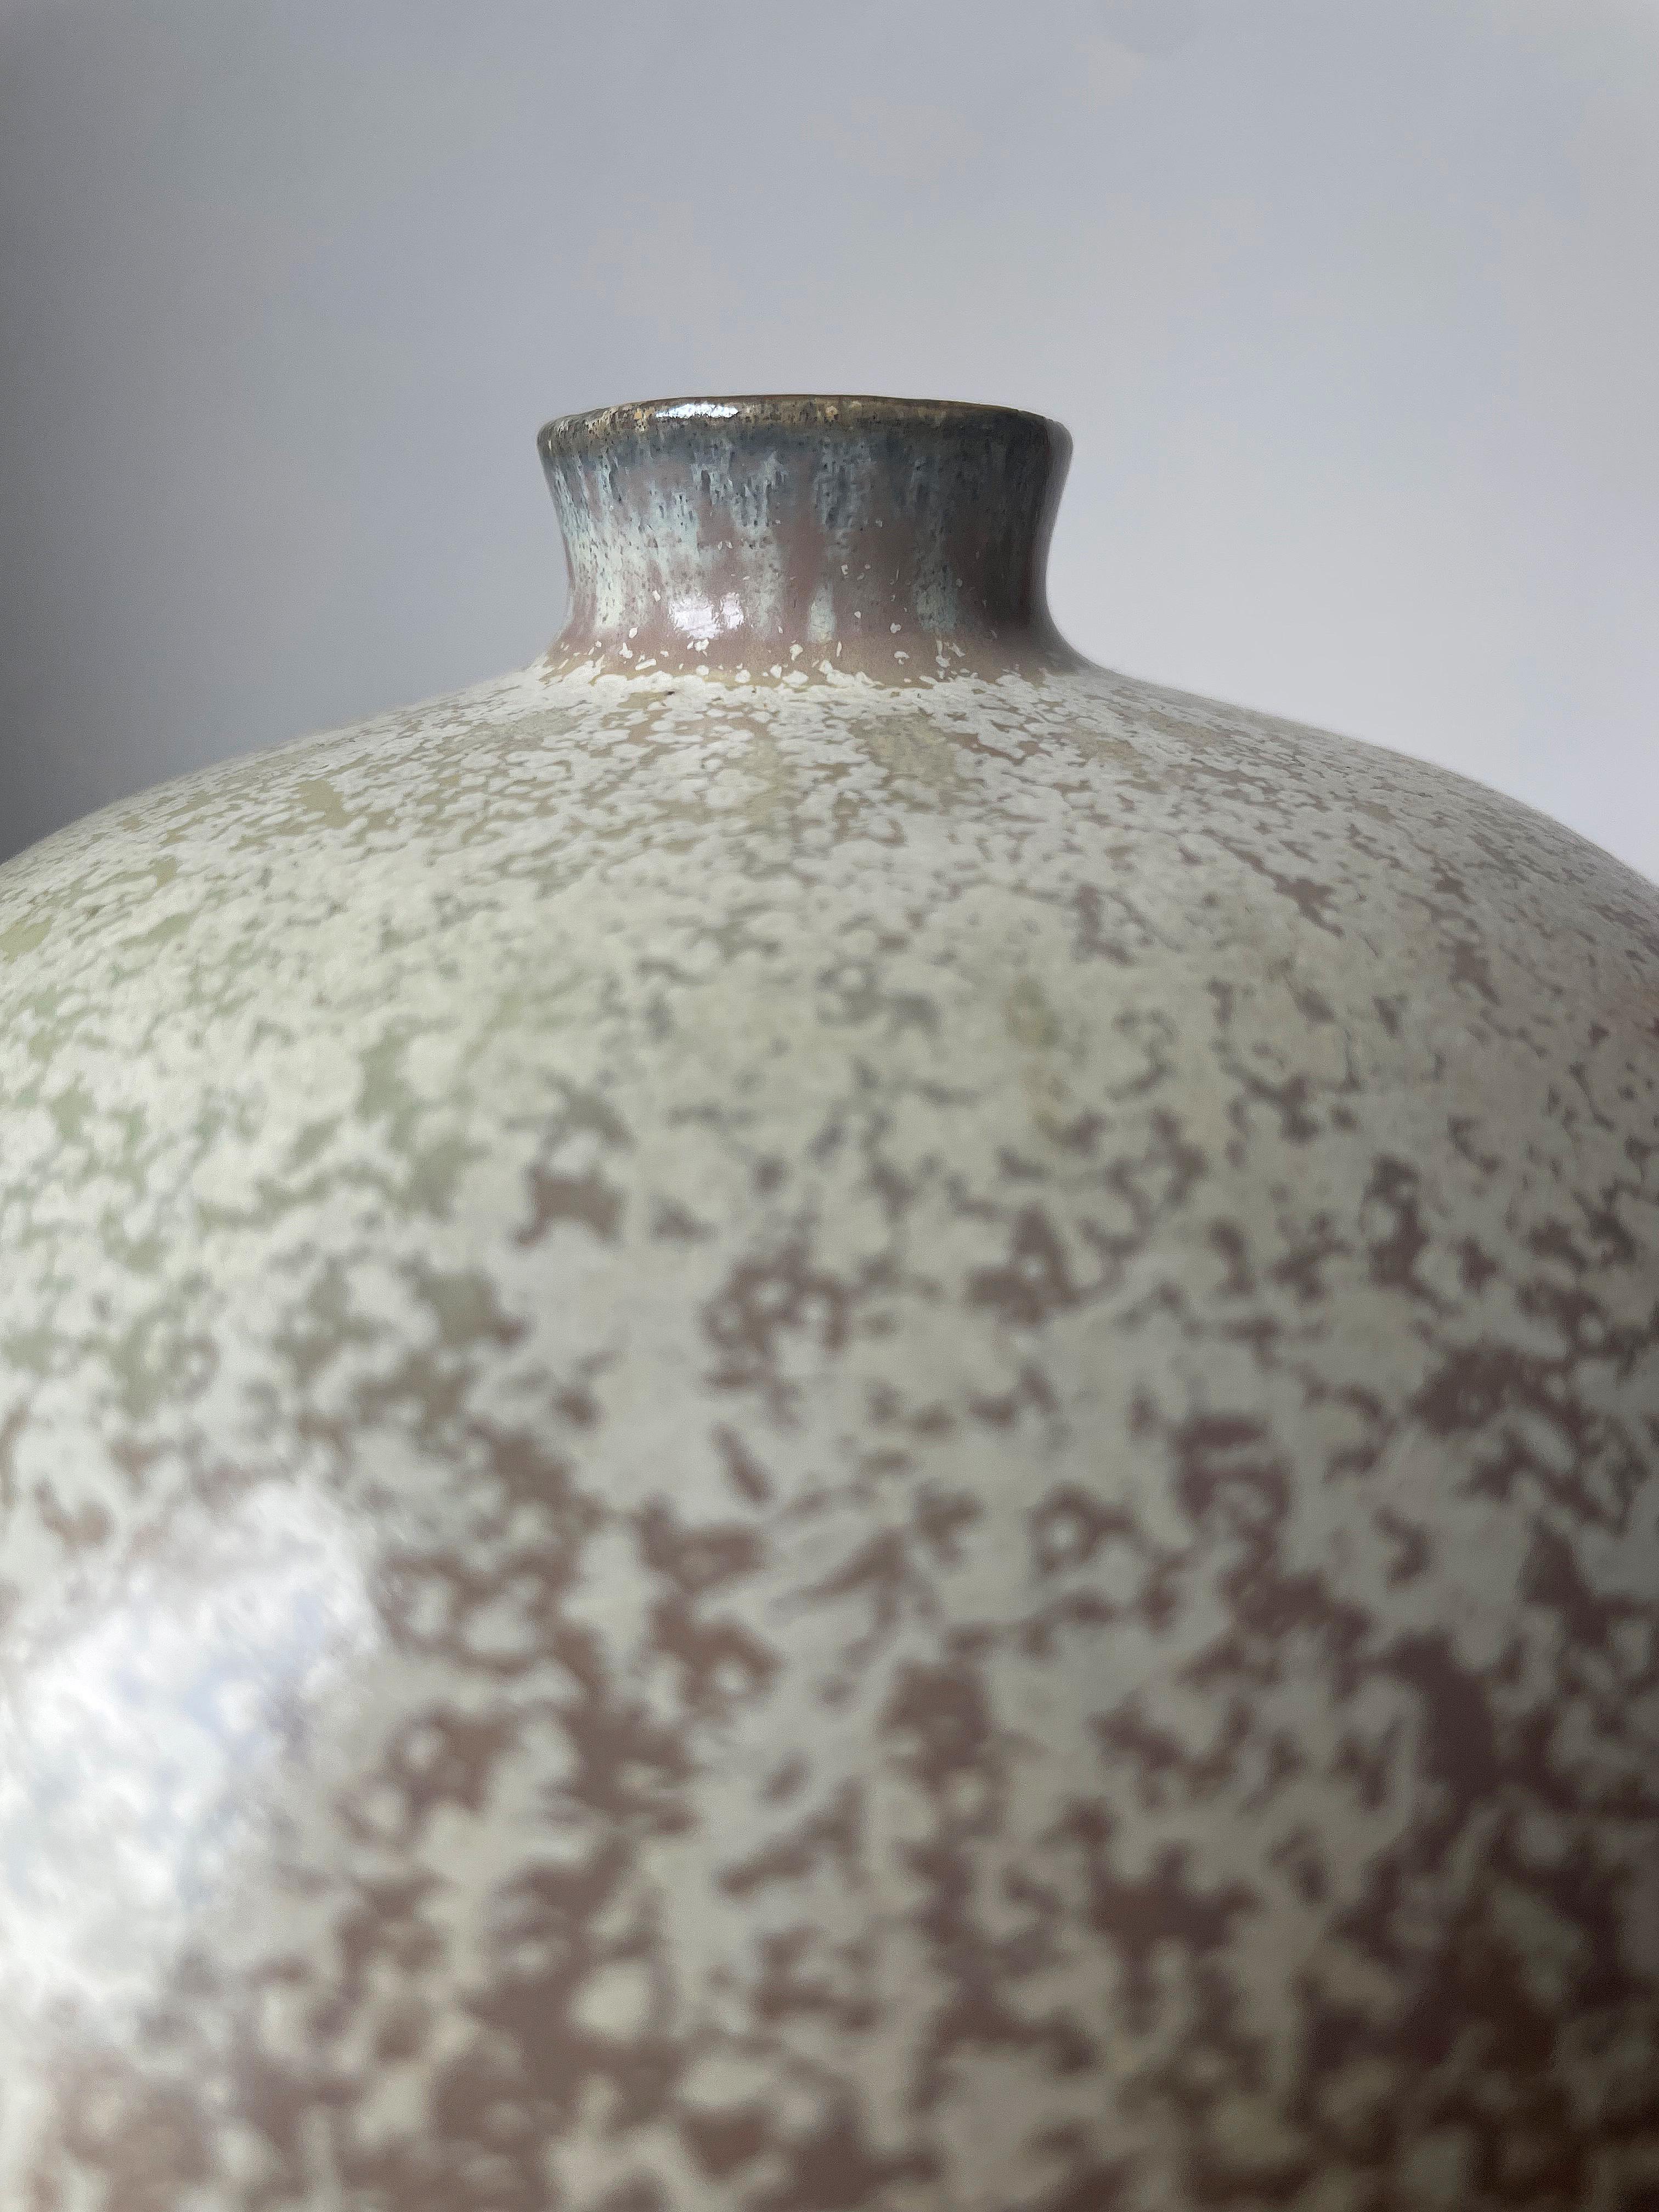 Organic Modern Spotted Glaze Ceramic Vase, 1970s For Sale 2